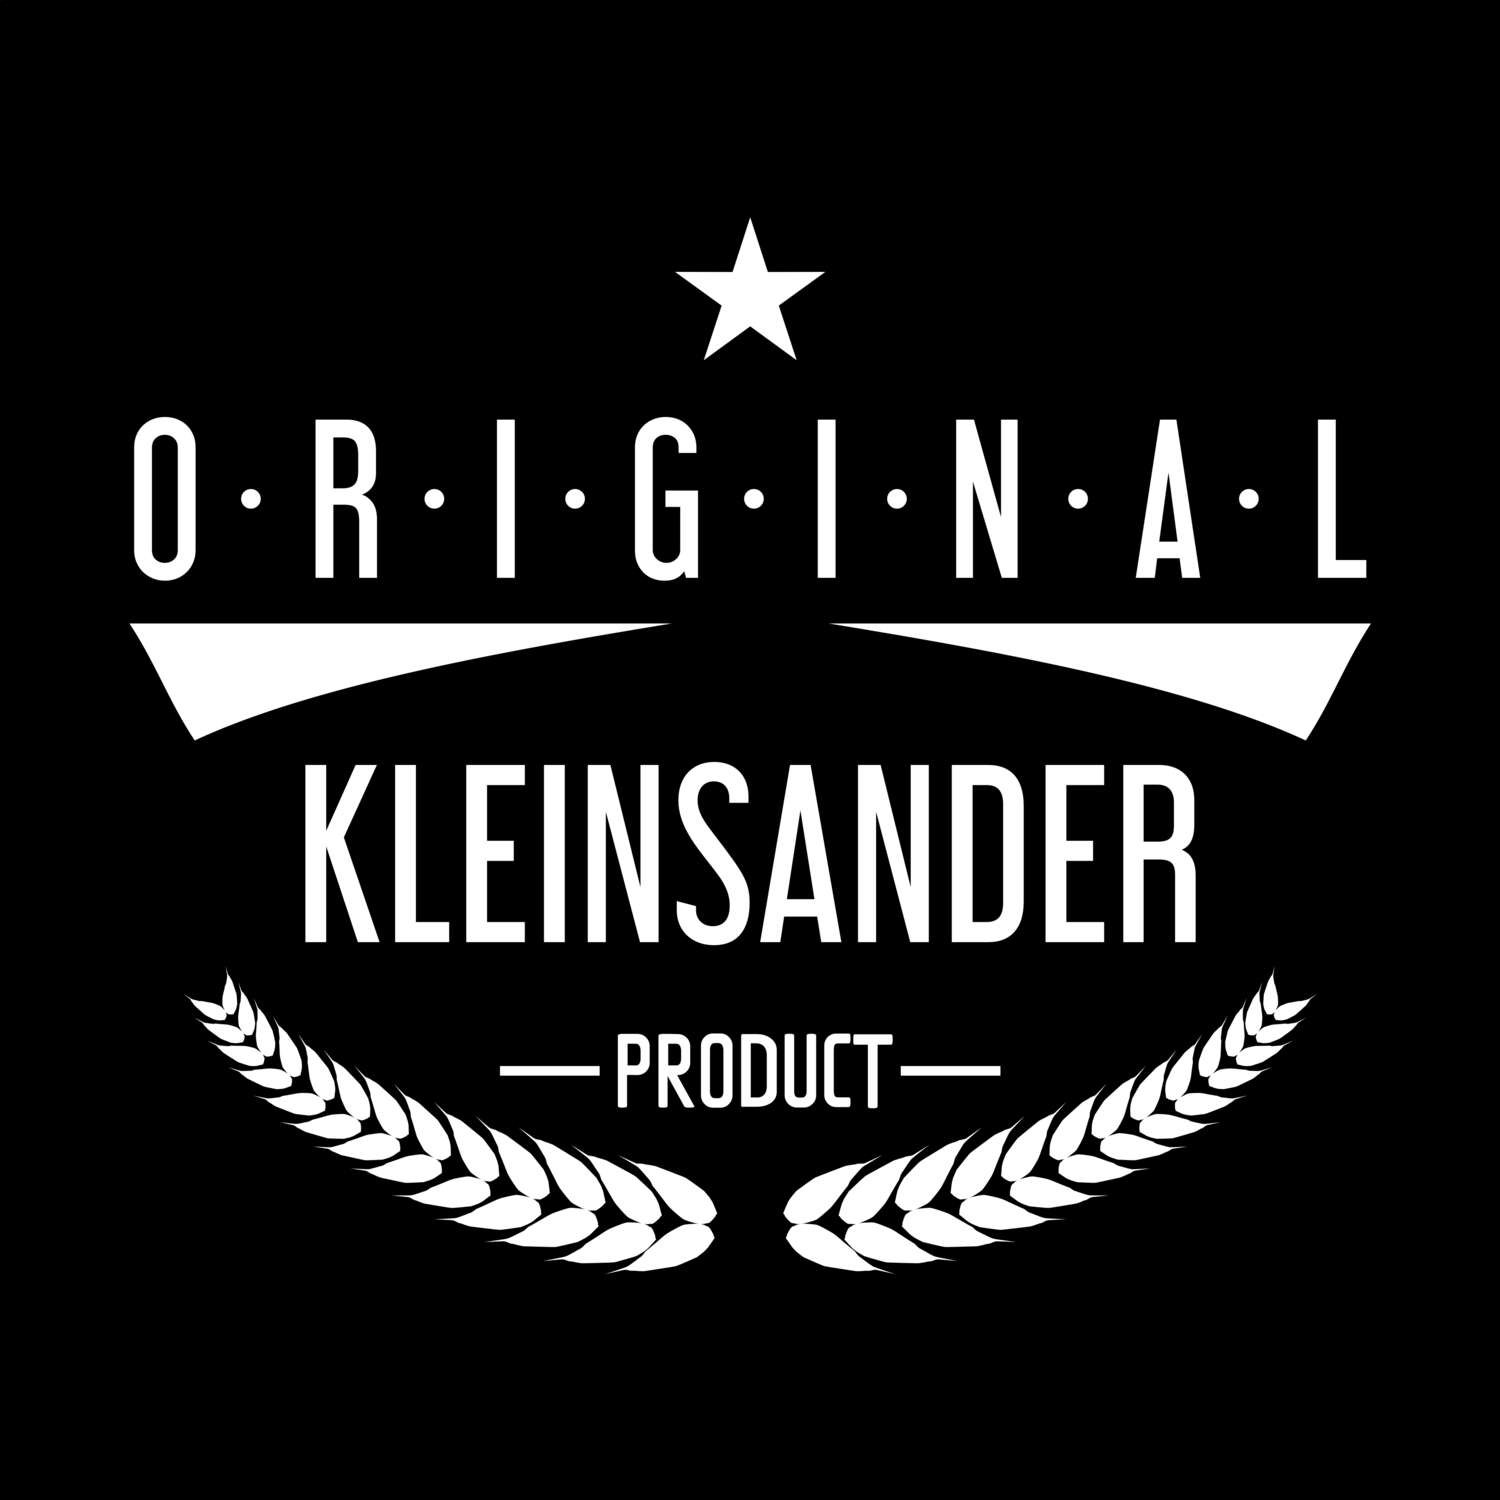 Kleinsander T-Shirt »Original Product«